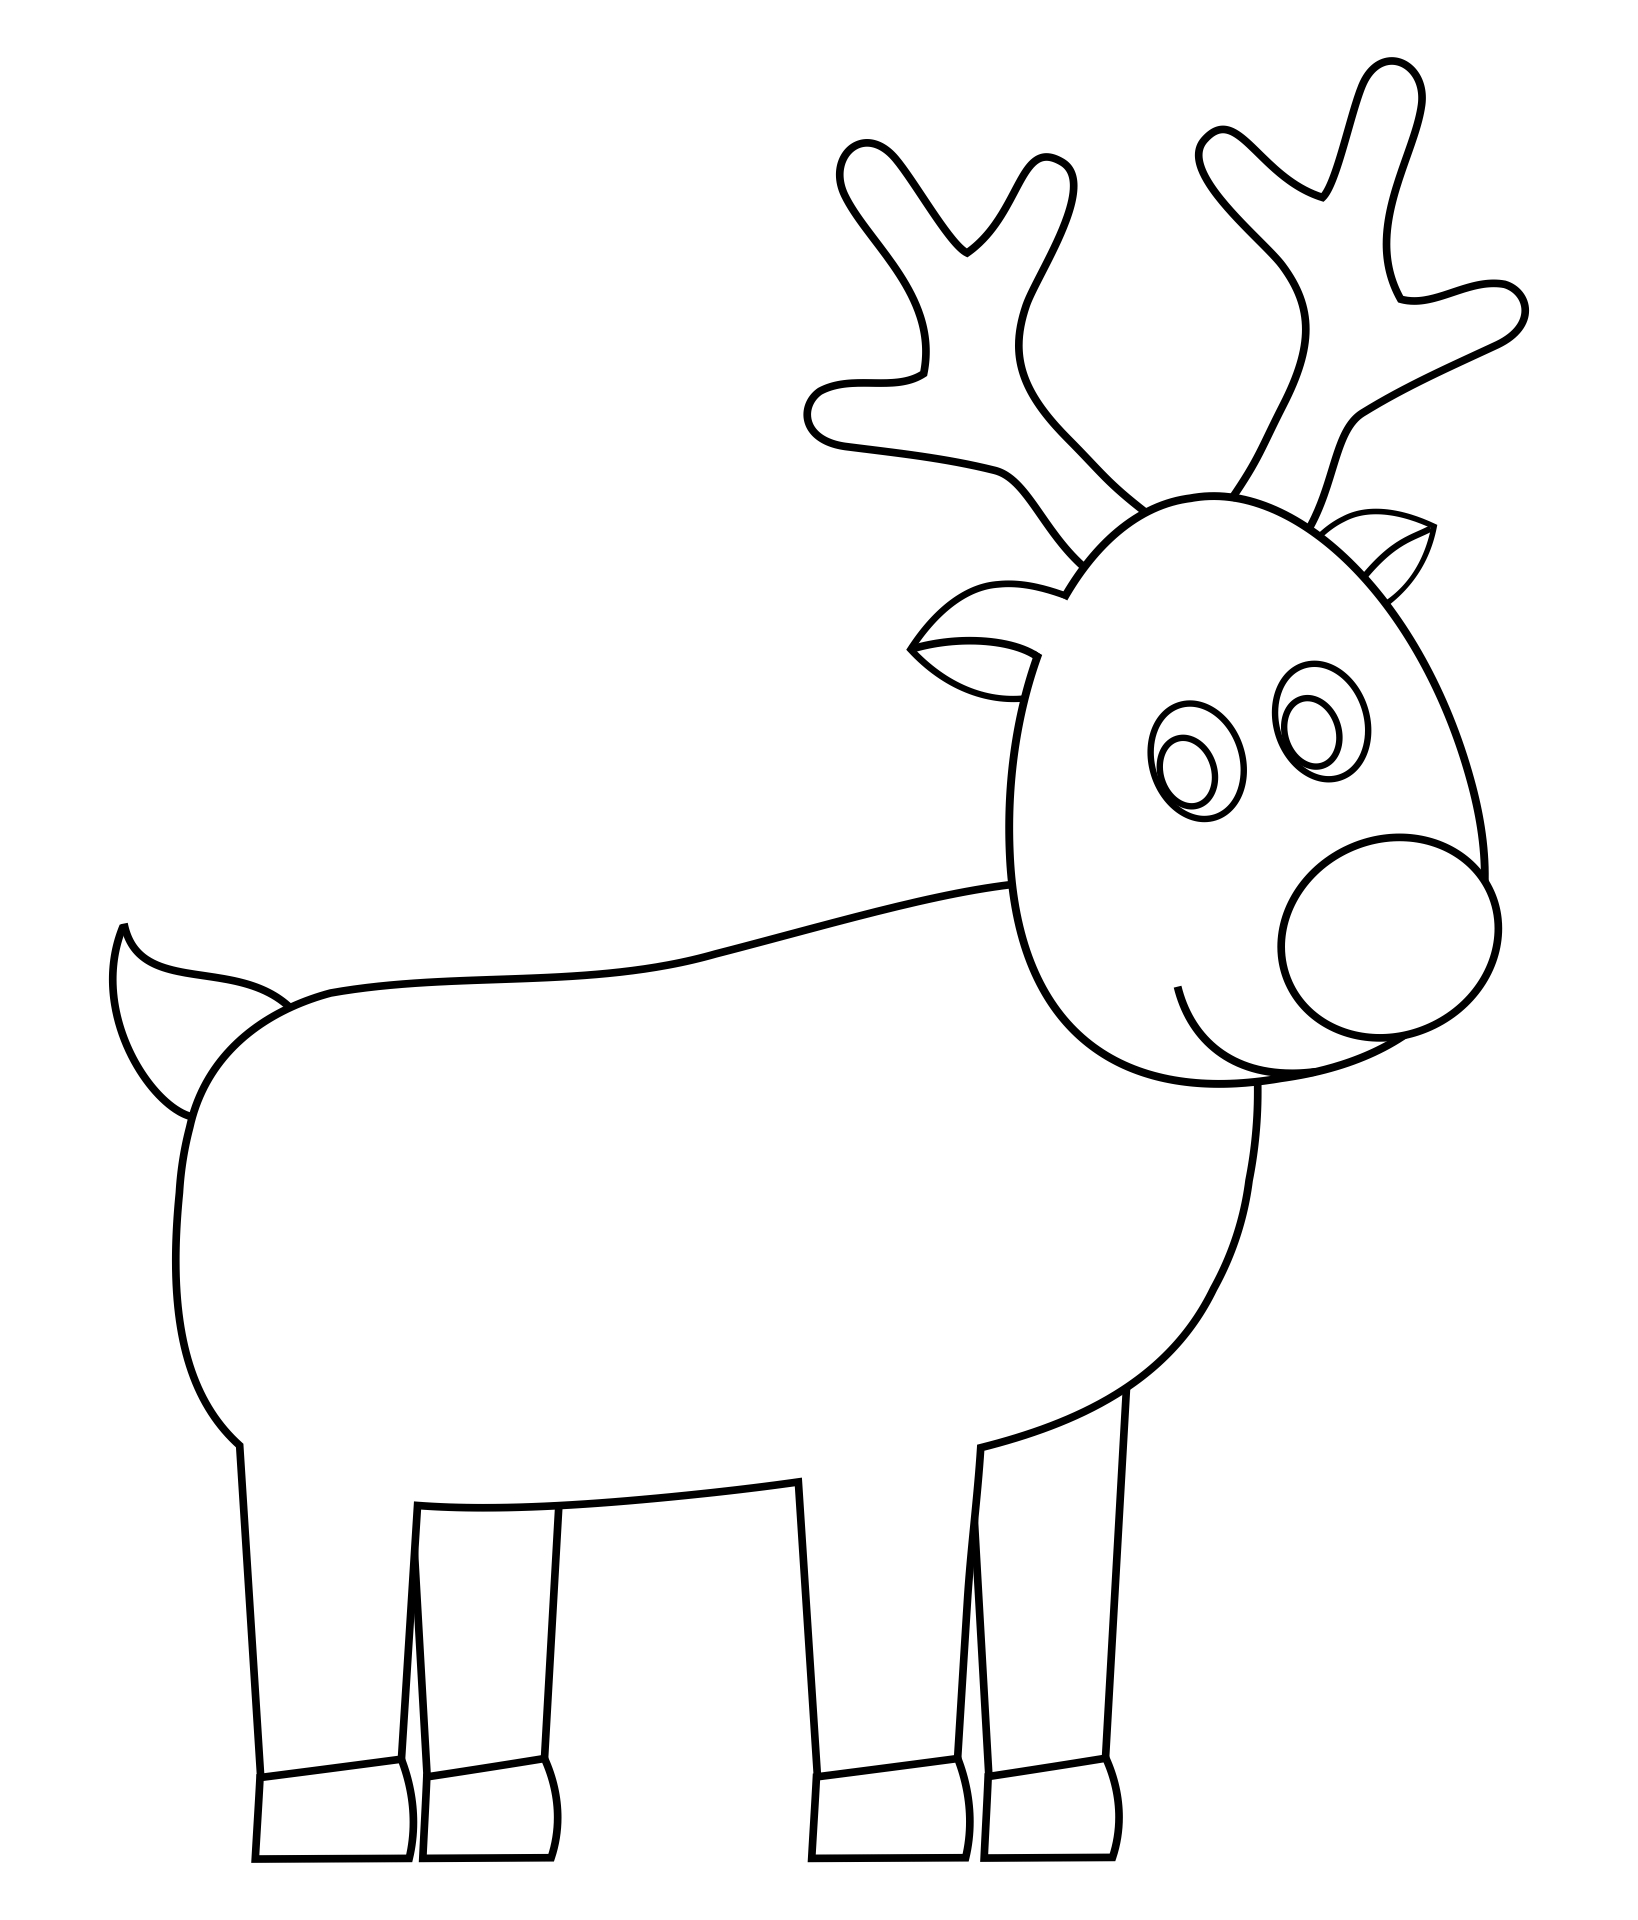 Reindeer Templates For Christmas